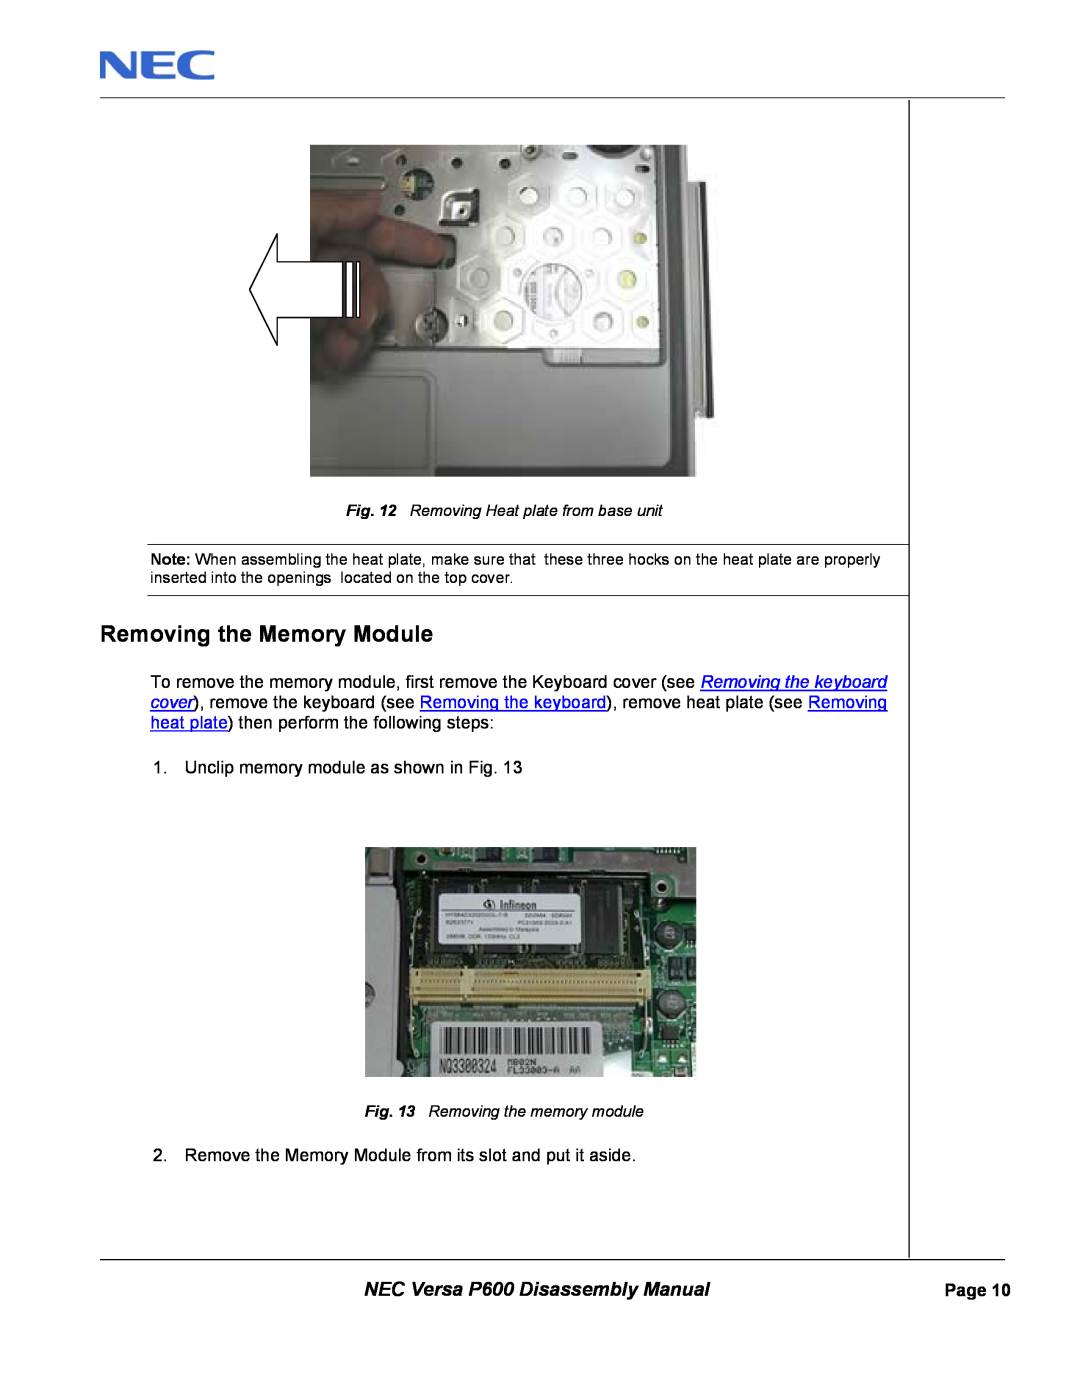 NEC manual Removing the Memory Module, NEC Versa P600 Disassembly Manual 